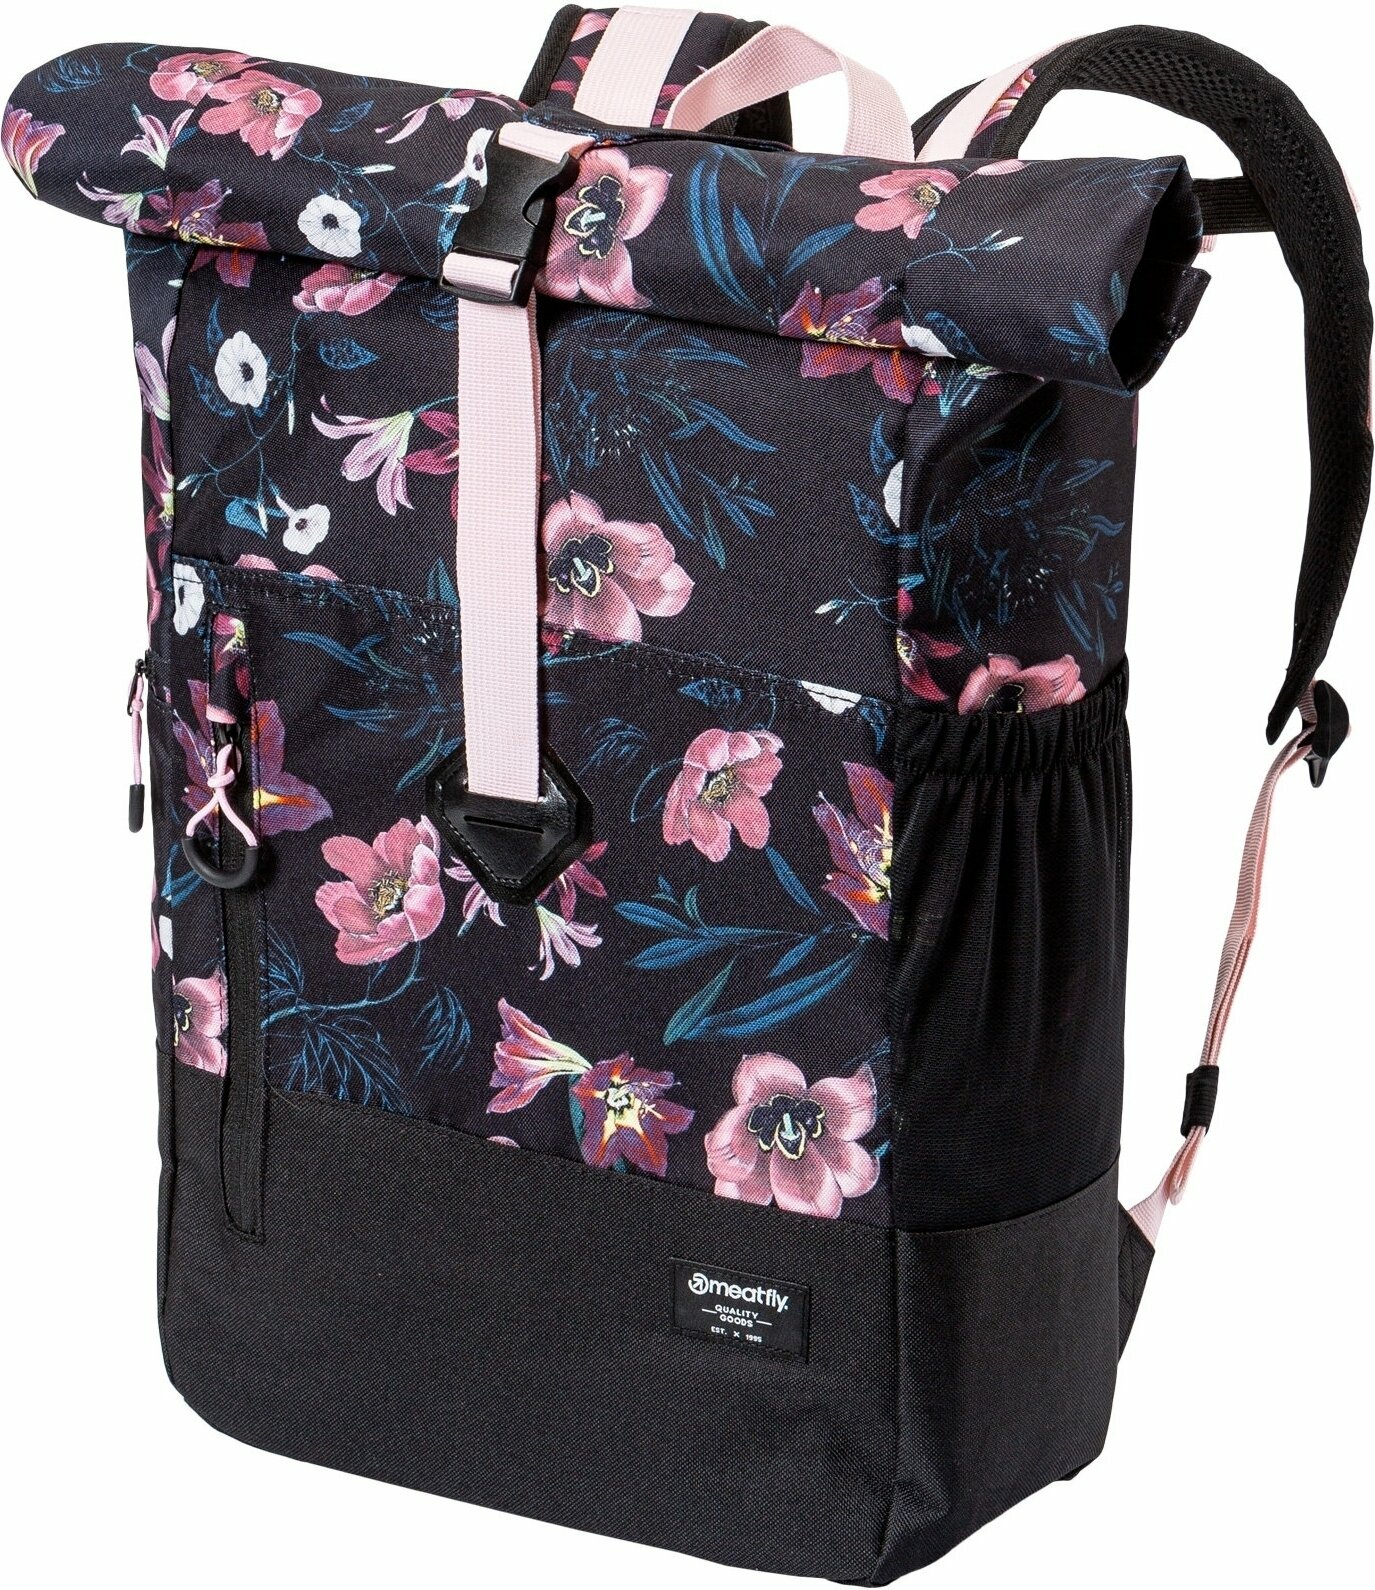 Lifestyle sac à dos / Sac Meatfly Holler Backpack Hibiscus Black/Black 28 L Sac à dos